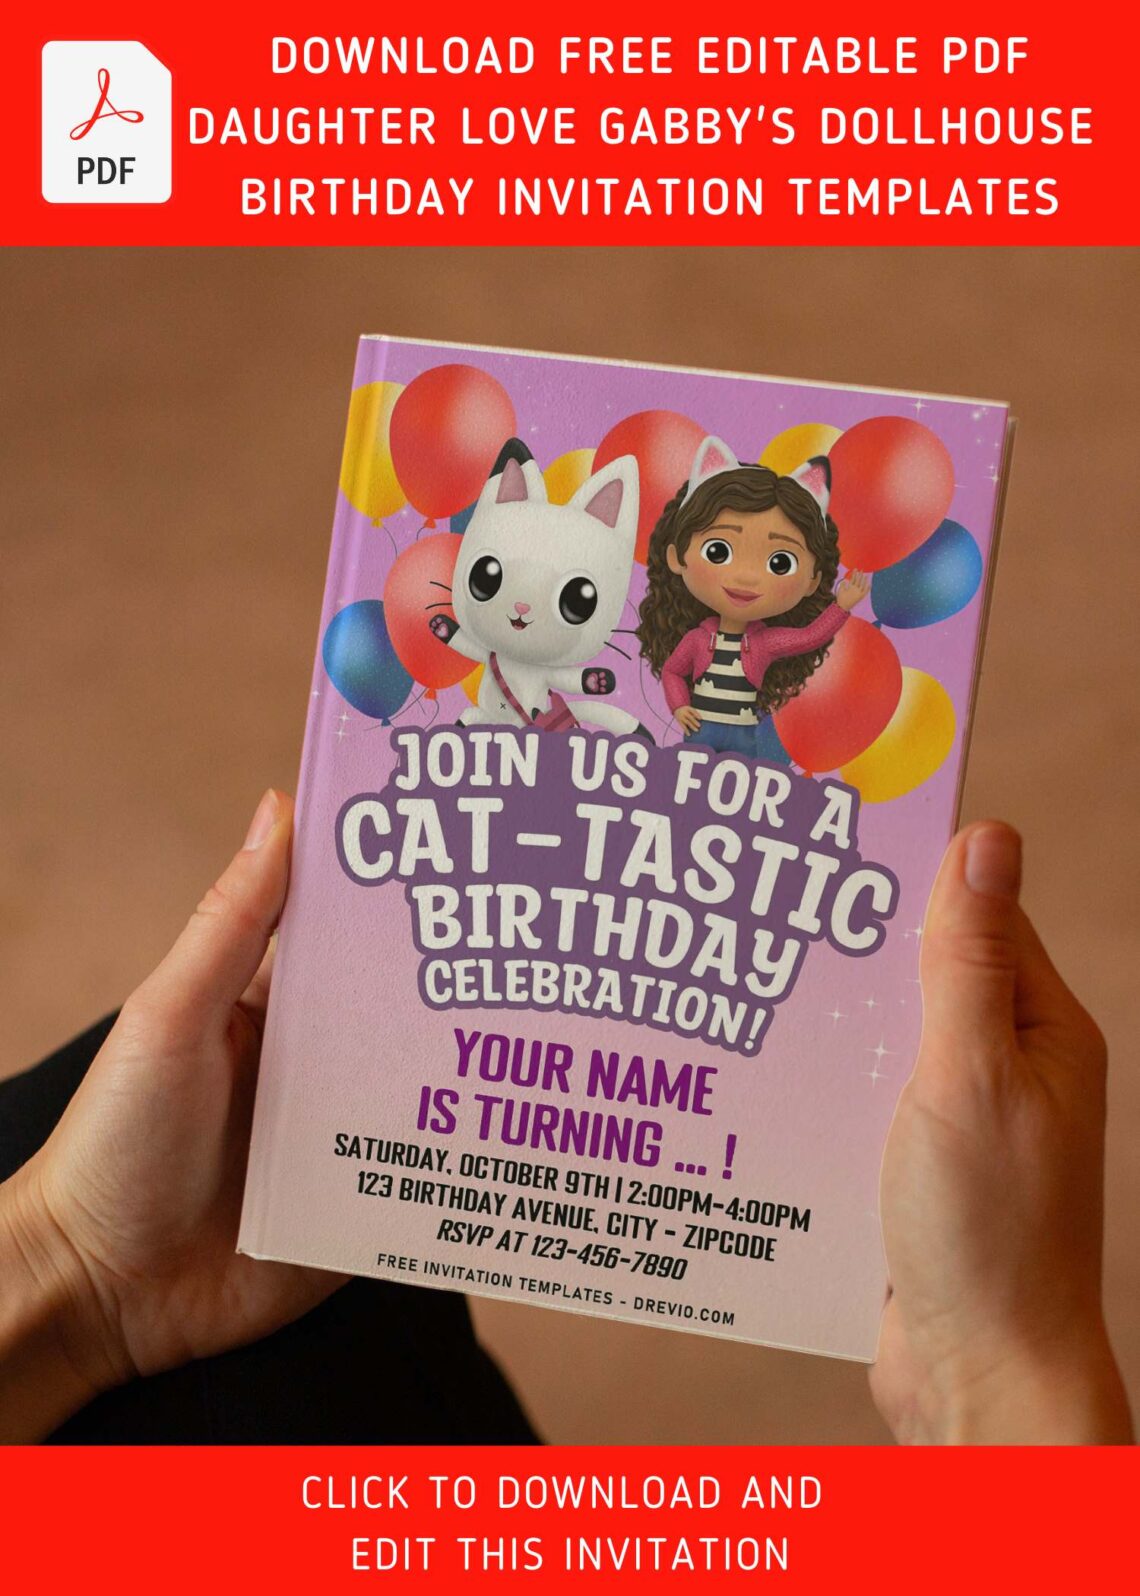 (Free Editable PDF) CAT-TASTIC Gabby's Dollhouse Birthday Invitation Templates with